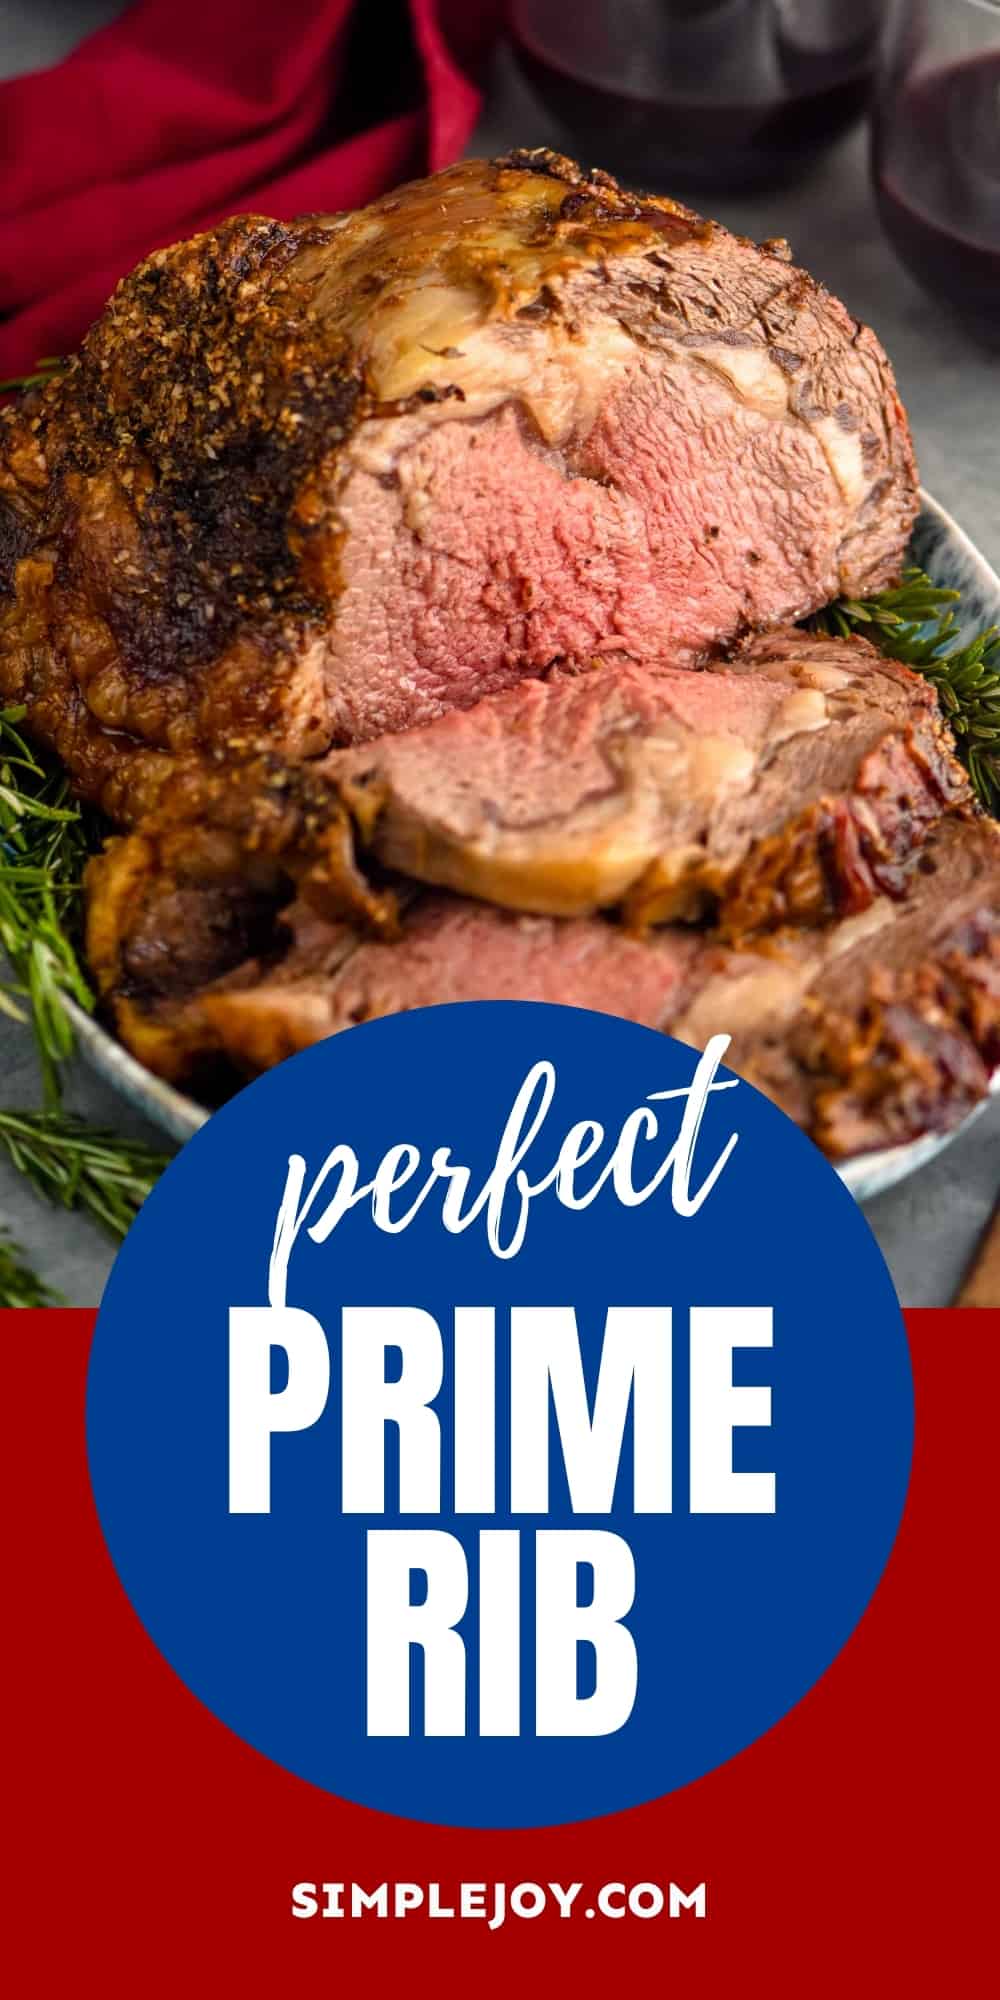 pinterest image for prime rib roast